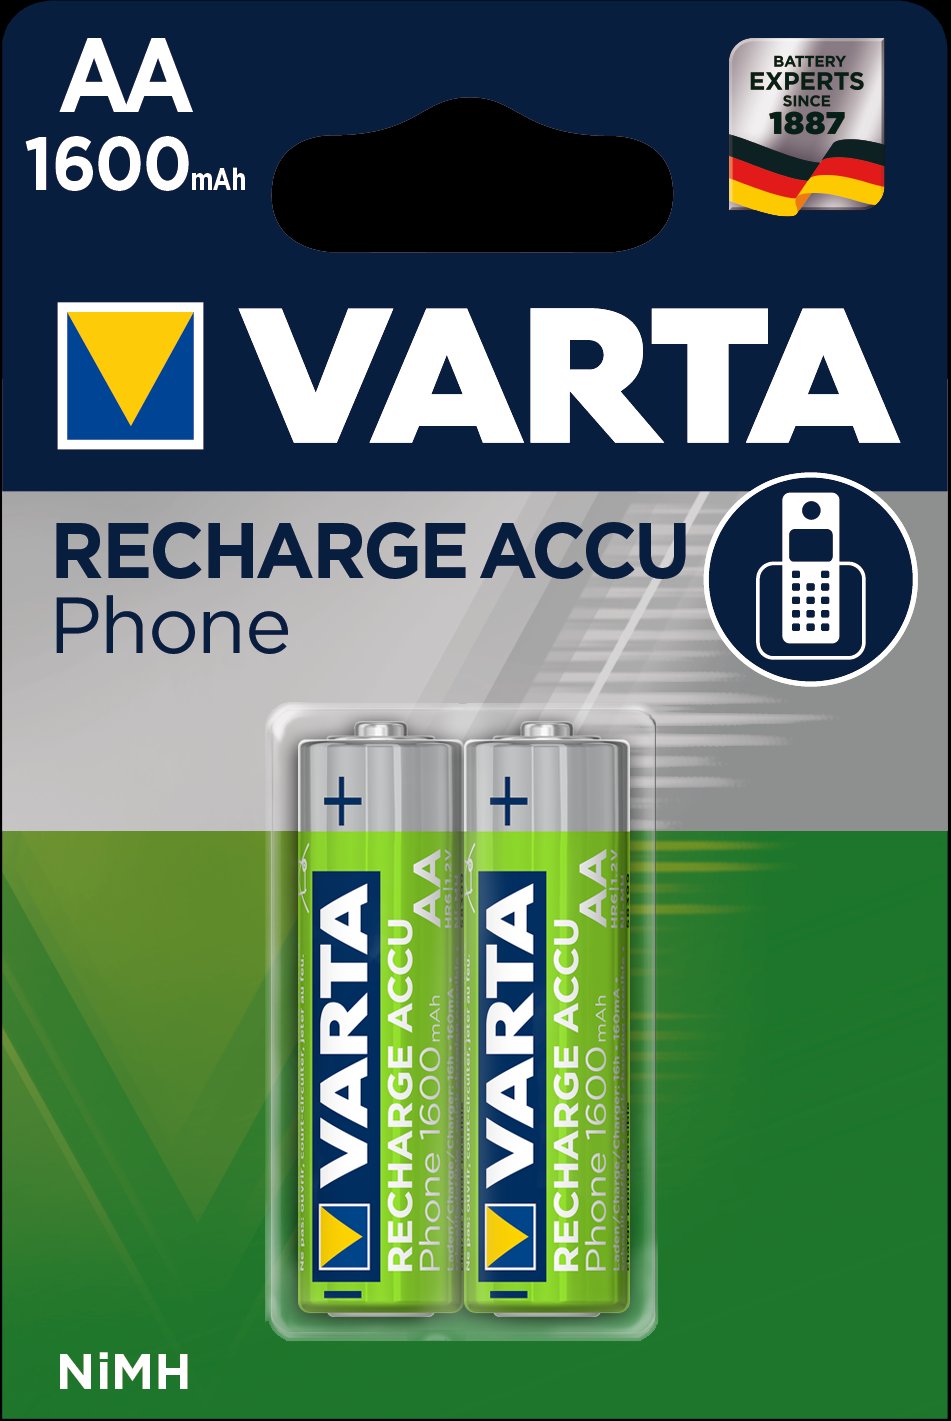 Varta T399 rechargeable battery